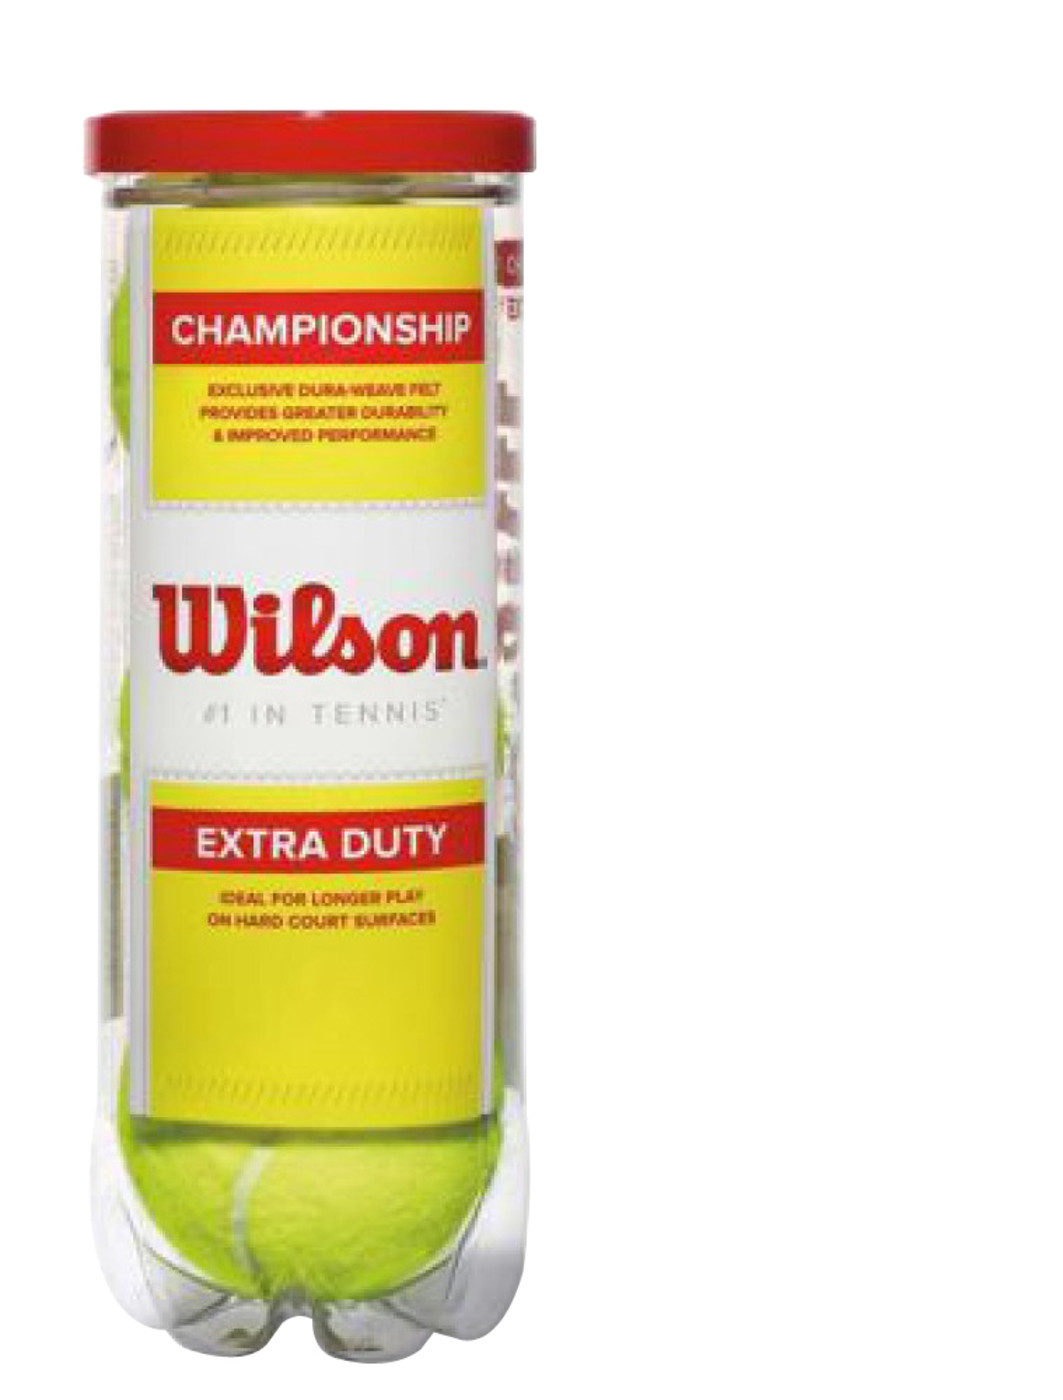 WILSON Tennisball CHAMPIONSHIP